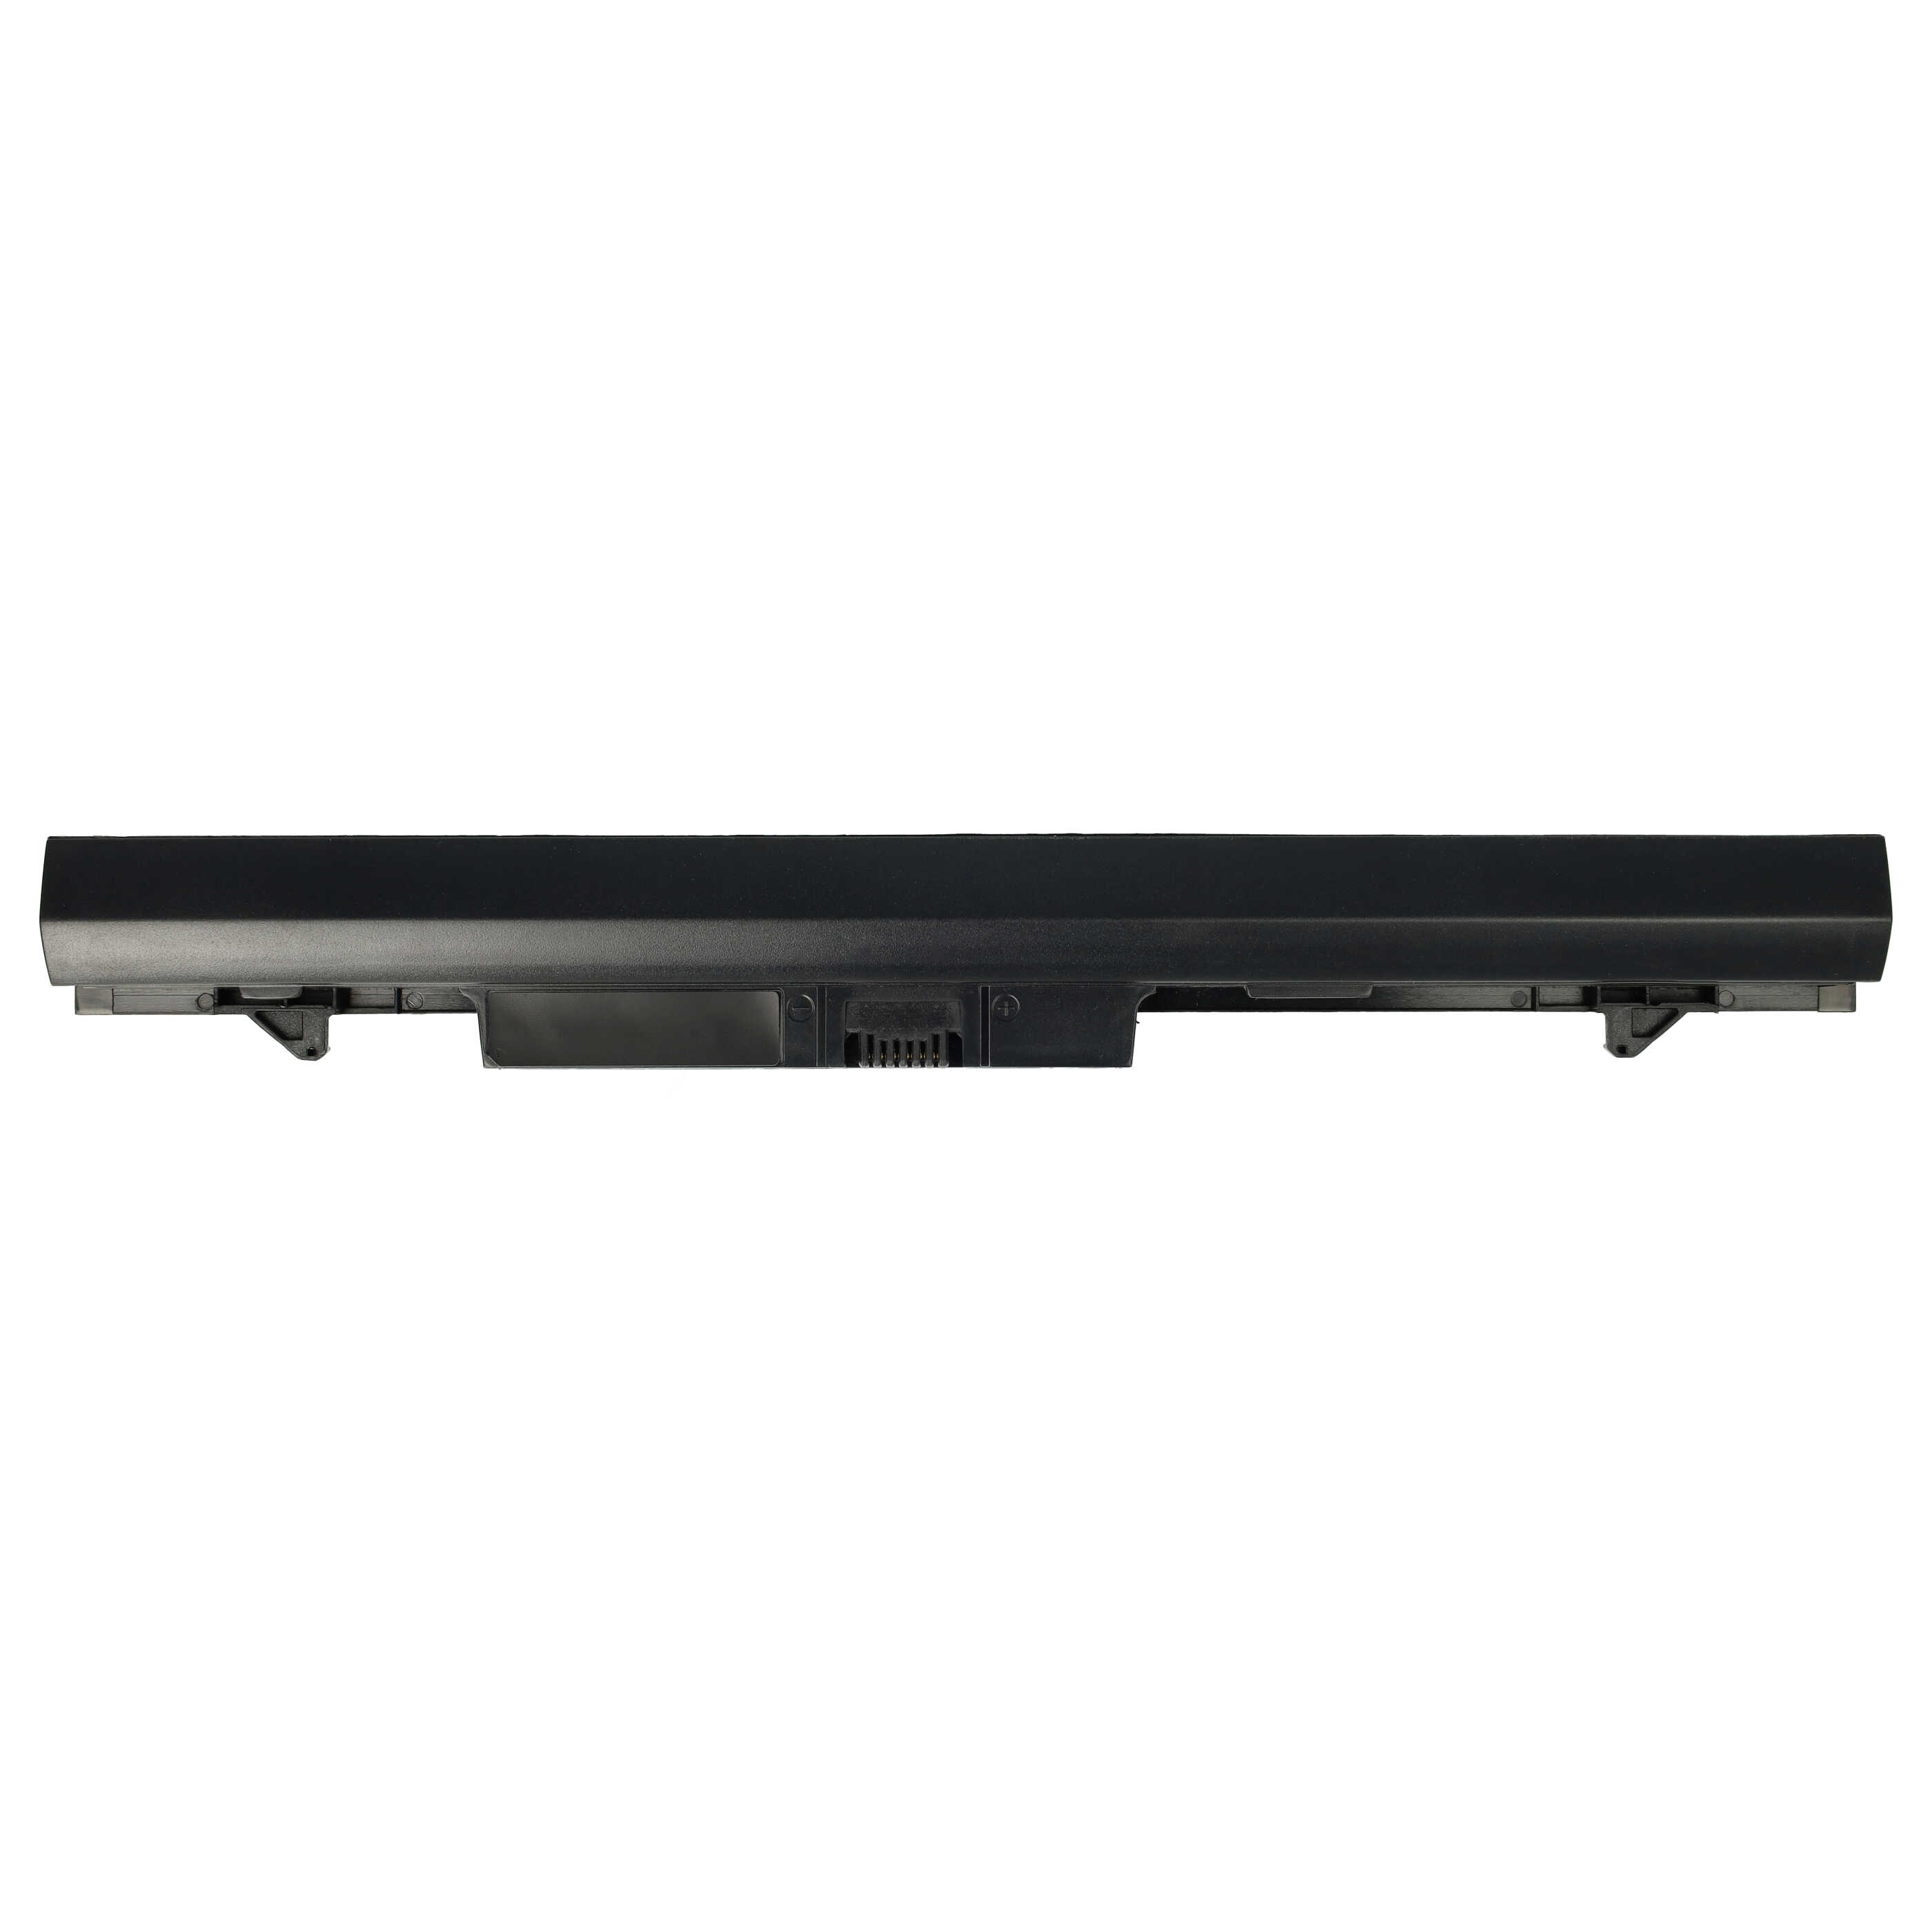 Notebook Battery Replacement for HP HSTNN-IB4L - 2200mAh 14.8V Li-Ion, black